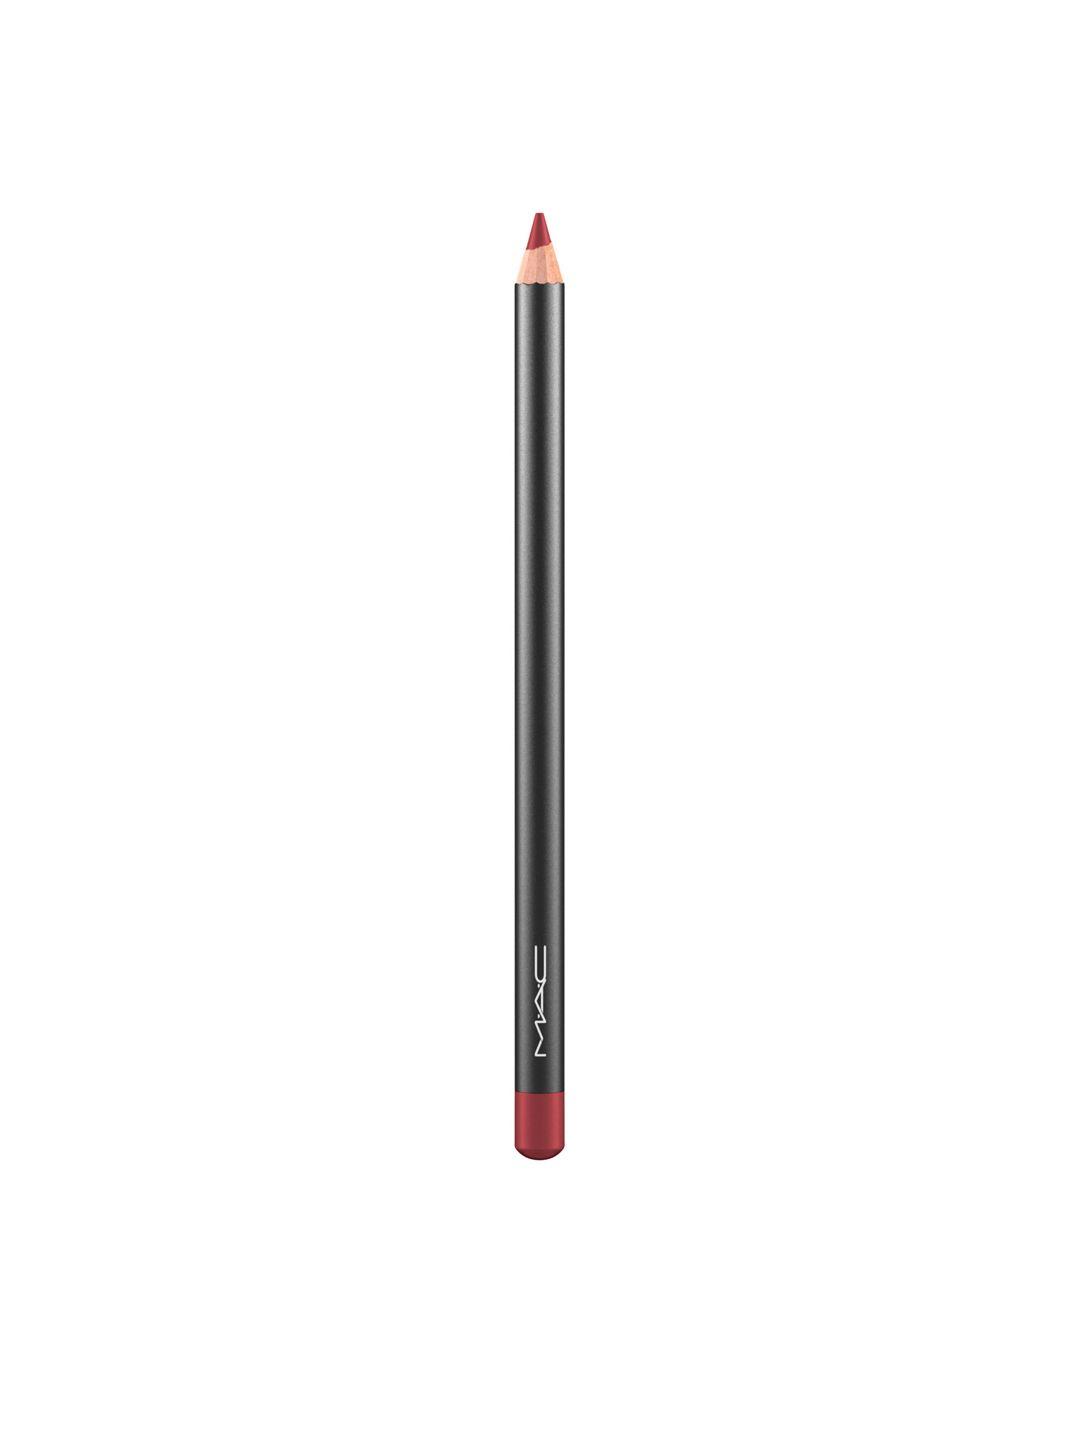 m.a.c longwear tansfer proof lip liner pencil - brick 1.45 g